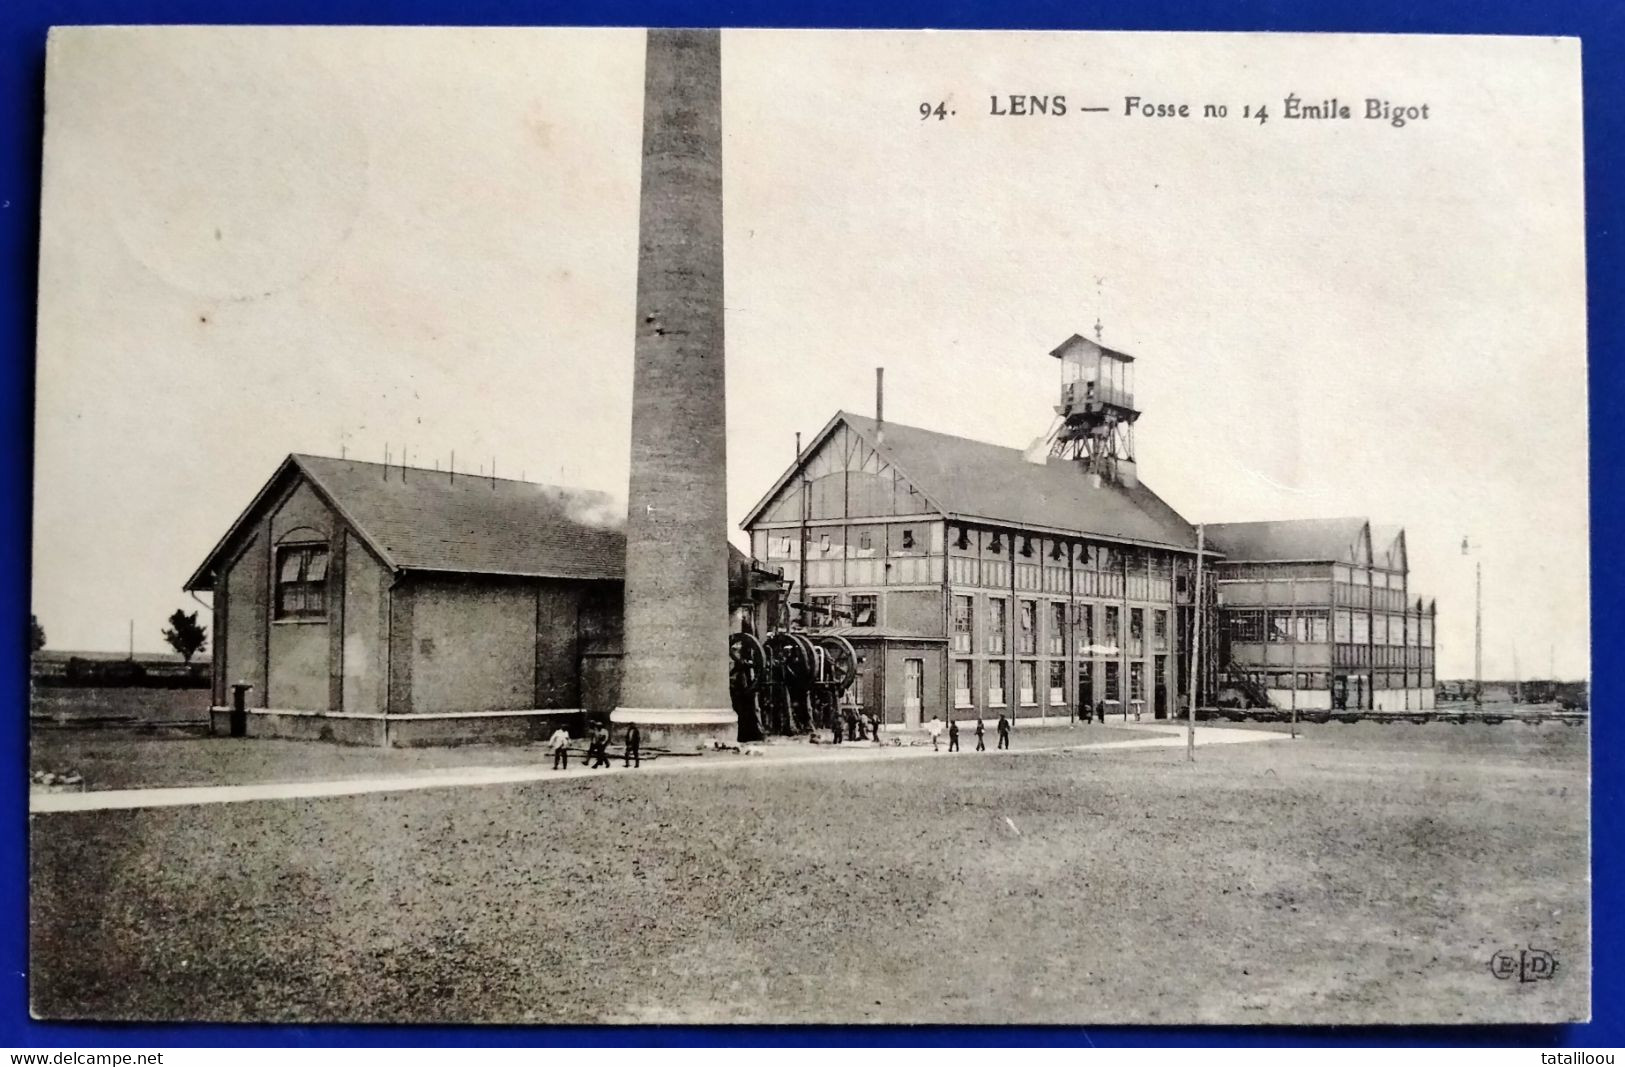 Carte Postale Ancienne - LENS - Fosse N°14  Emile Bigot - Mijnen